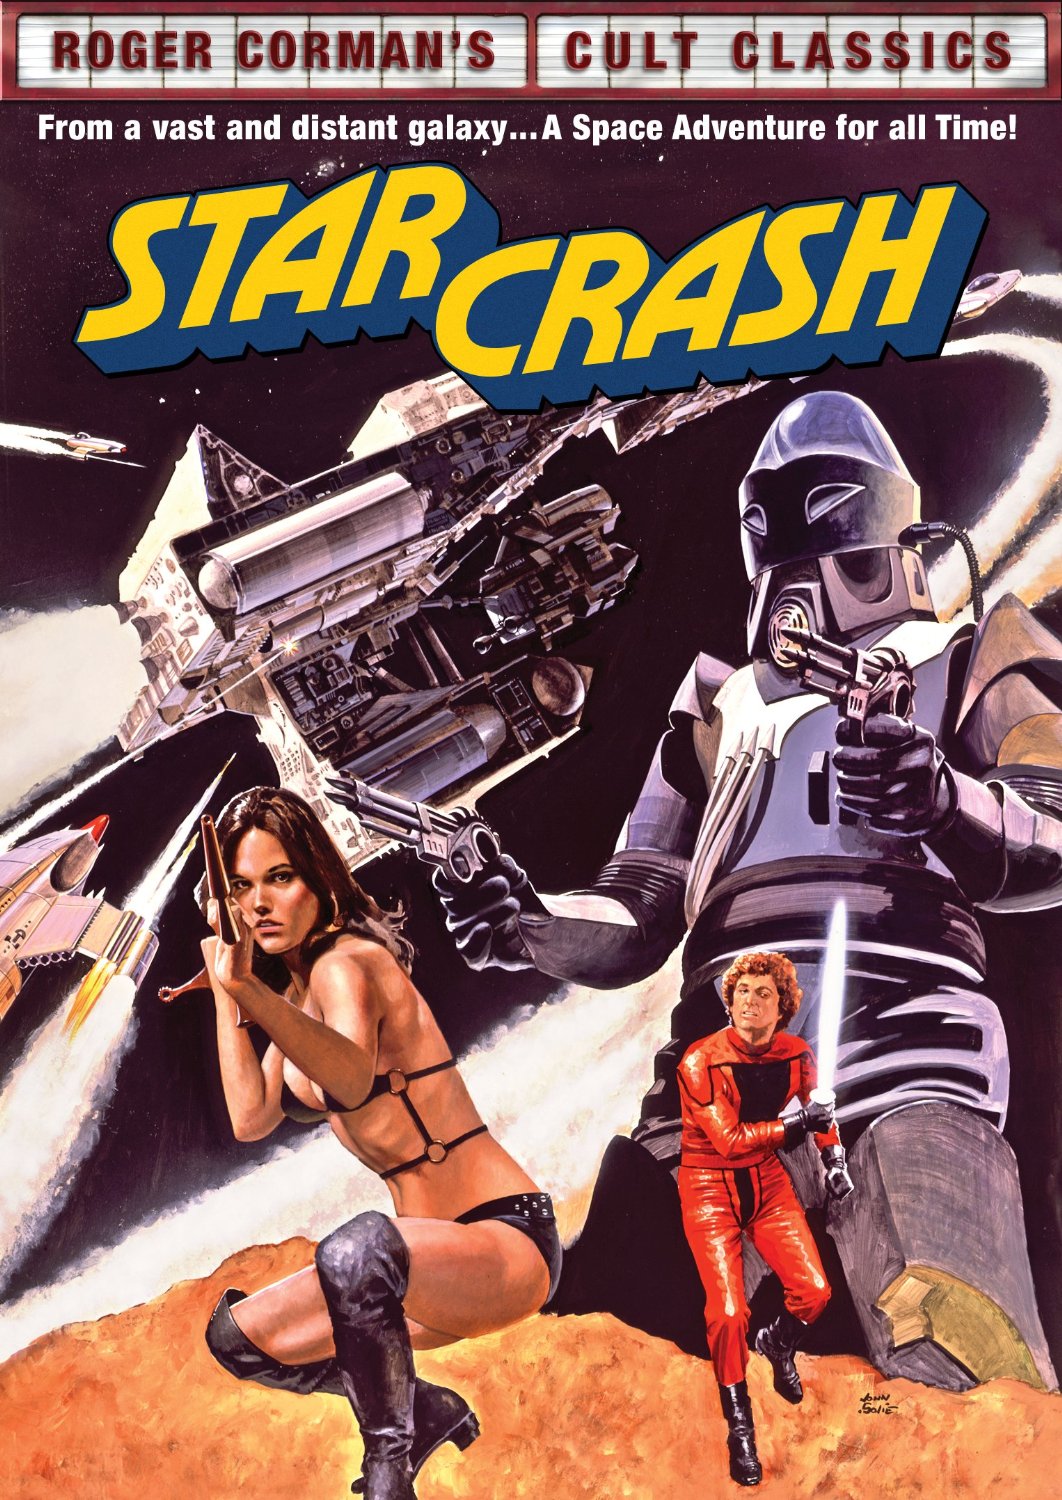 Starcrash, starring Caroline Munro, David Hasselhoff